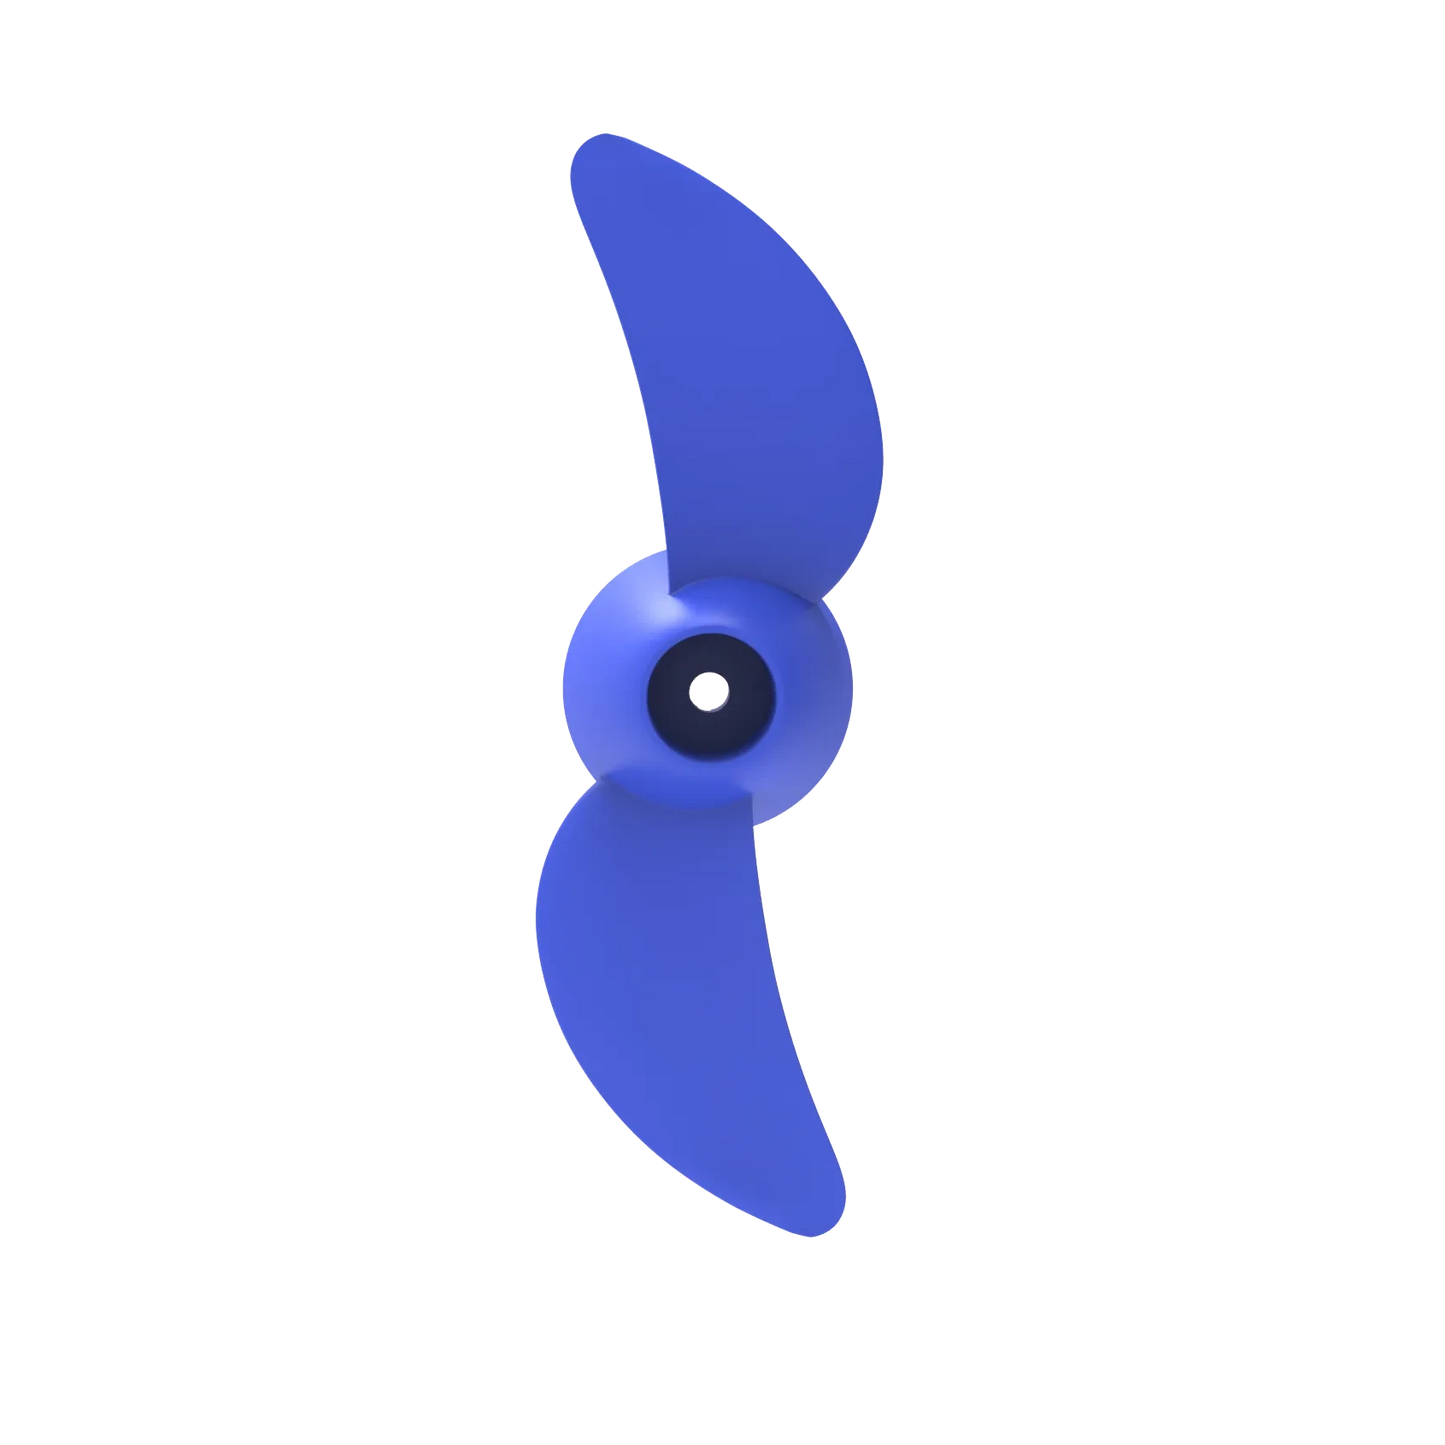 epropulsion spirit 1.0 plus propeller